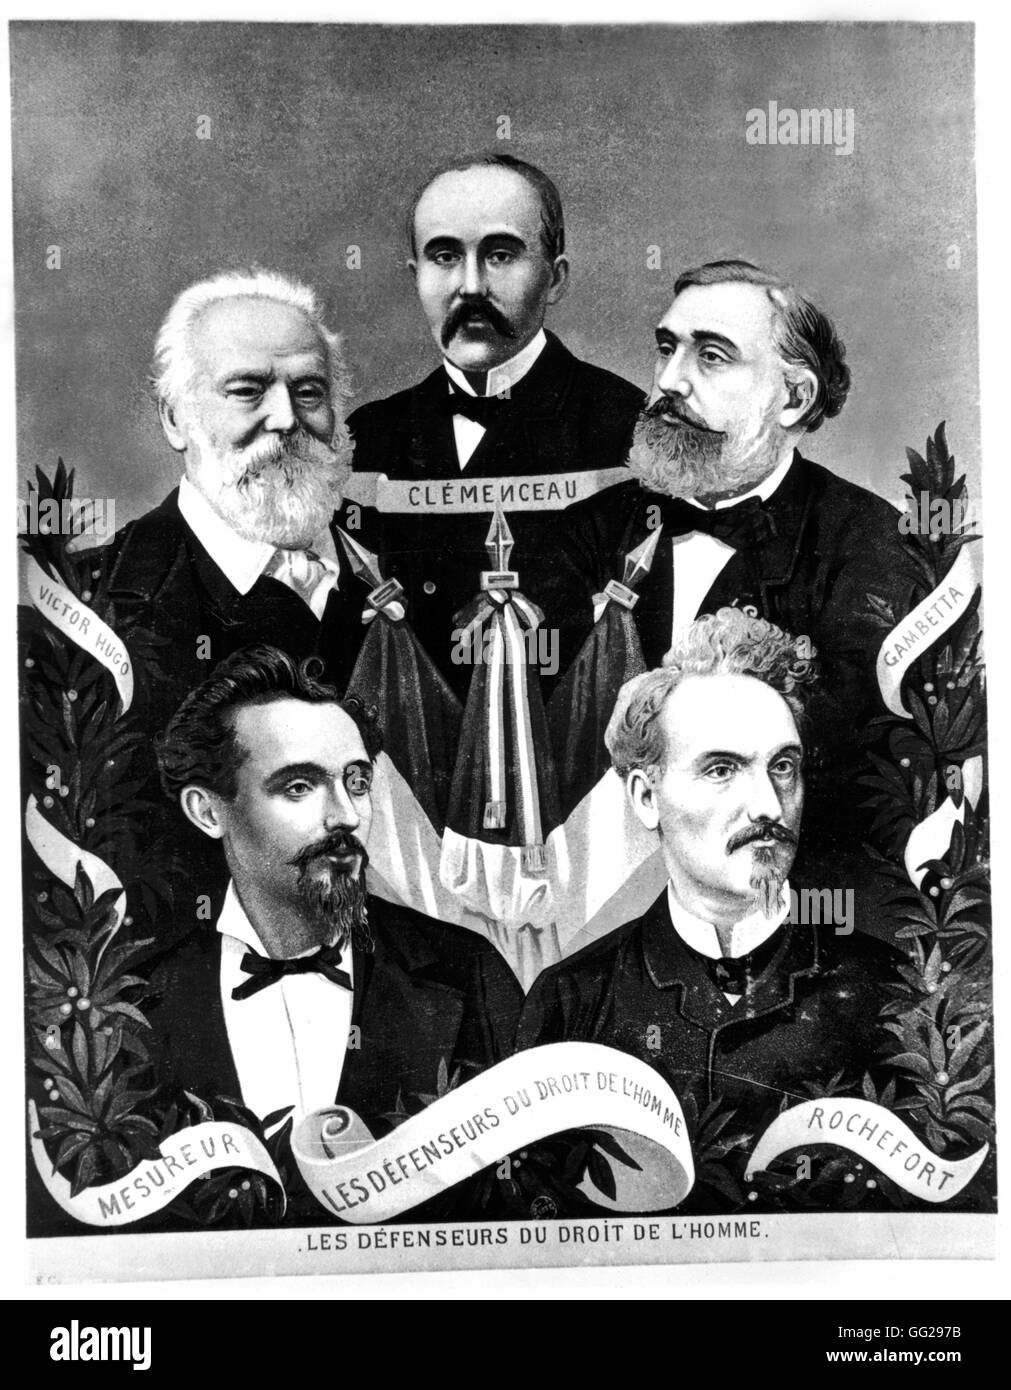 Defenders of human rights: Clemenceau, Victor Hugo, Gambetta, Mesureur and Rochefort 1871 France Stock Photo